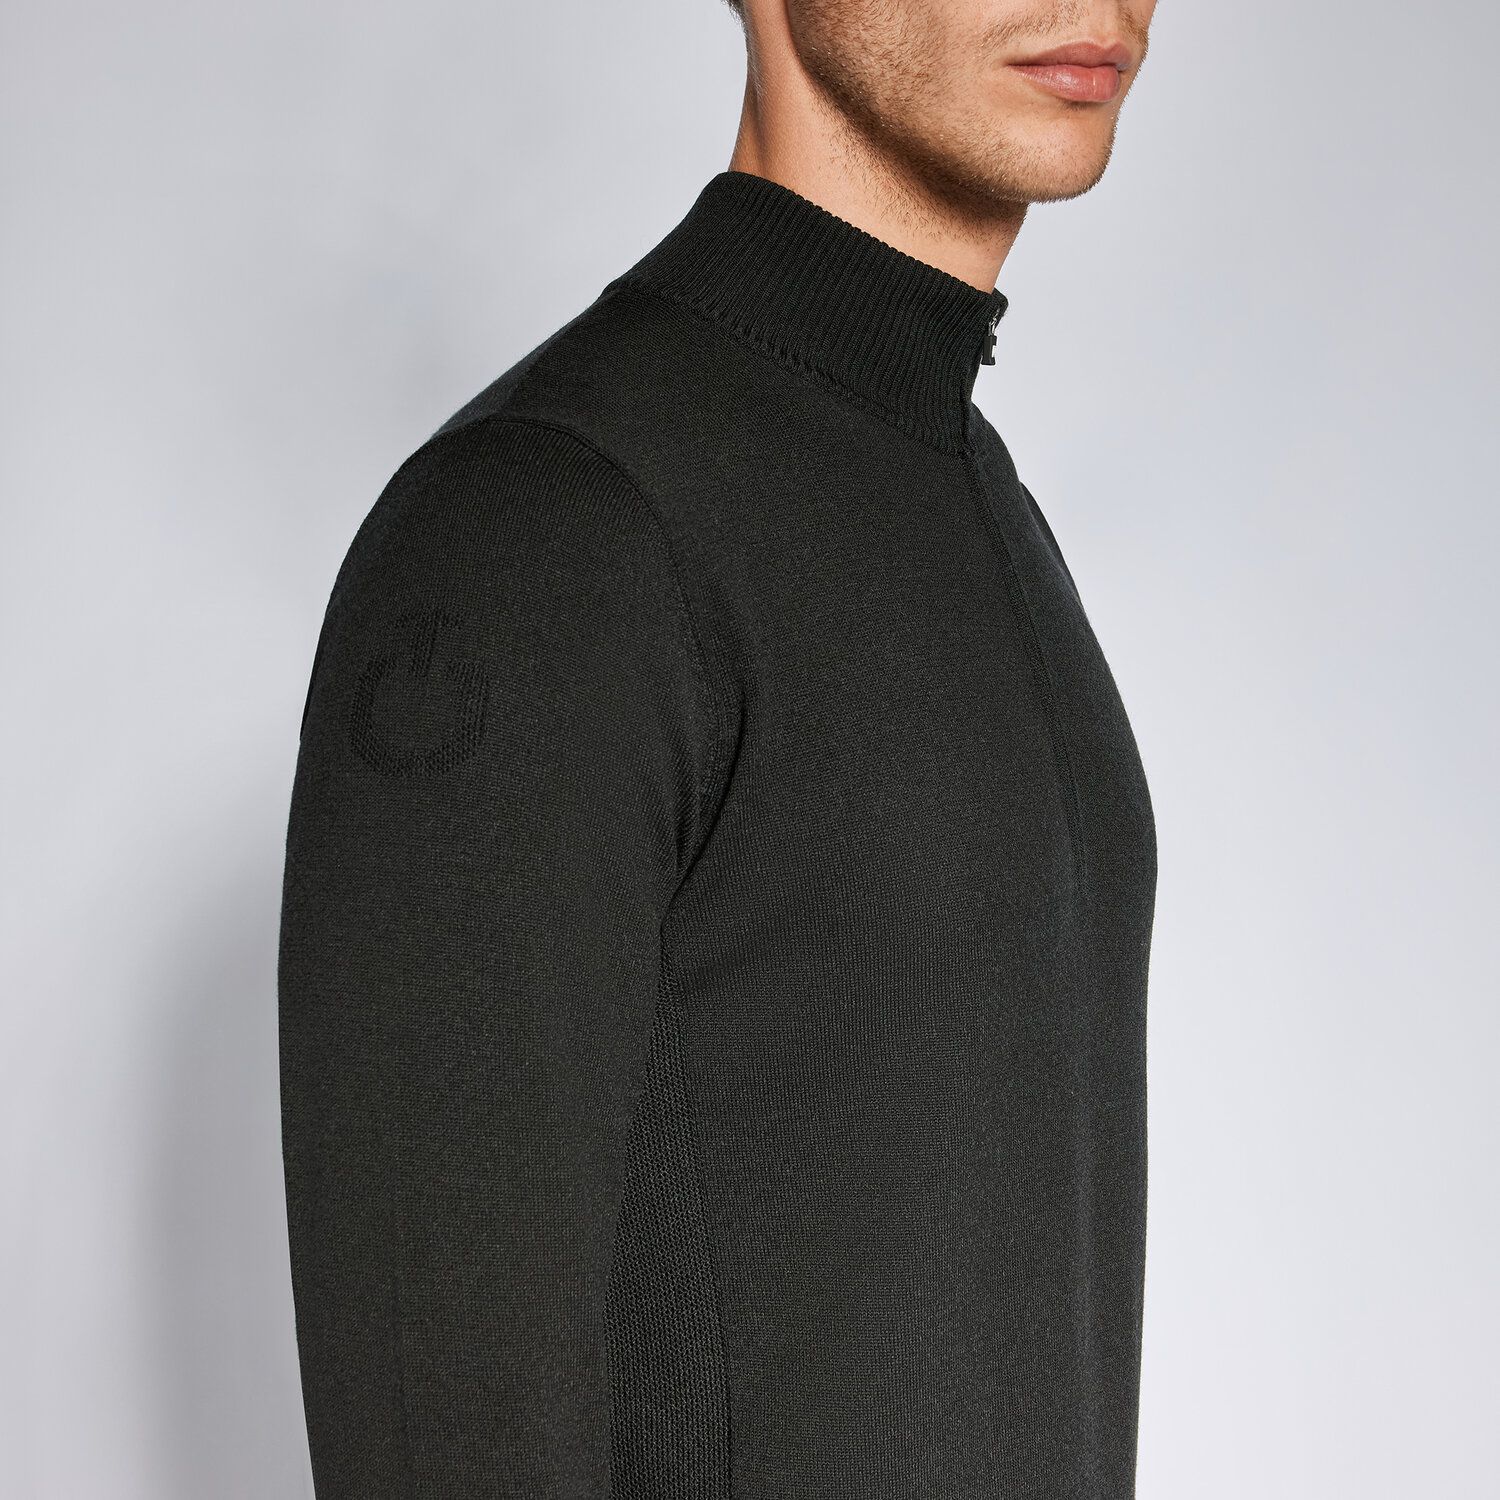 Cavalleria Toscana Men's Revolution sweater BLACK-3